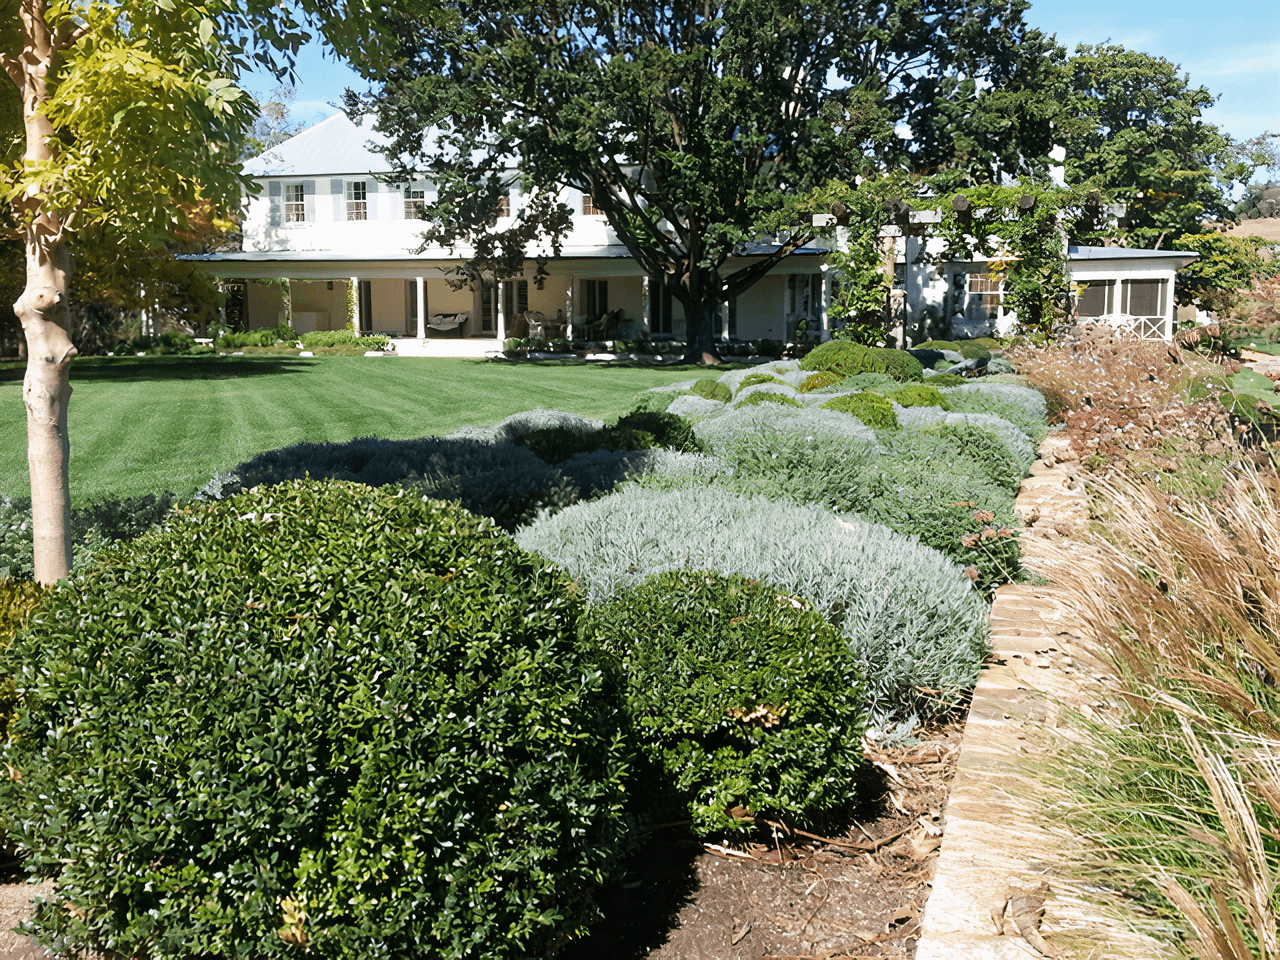 Retaining wall with raised garden